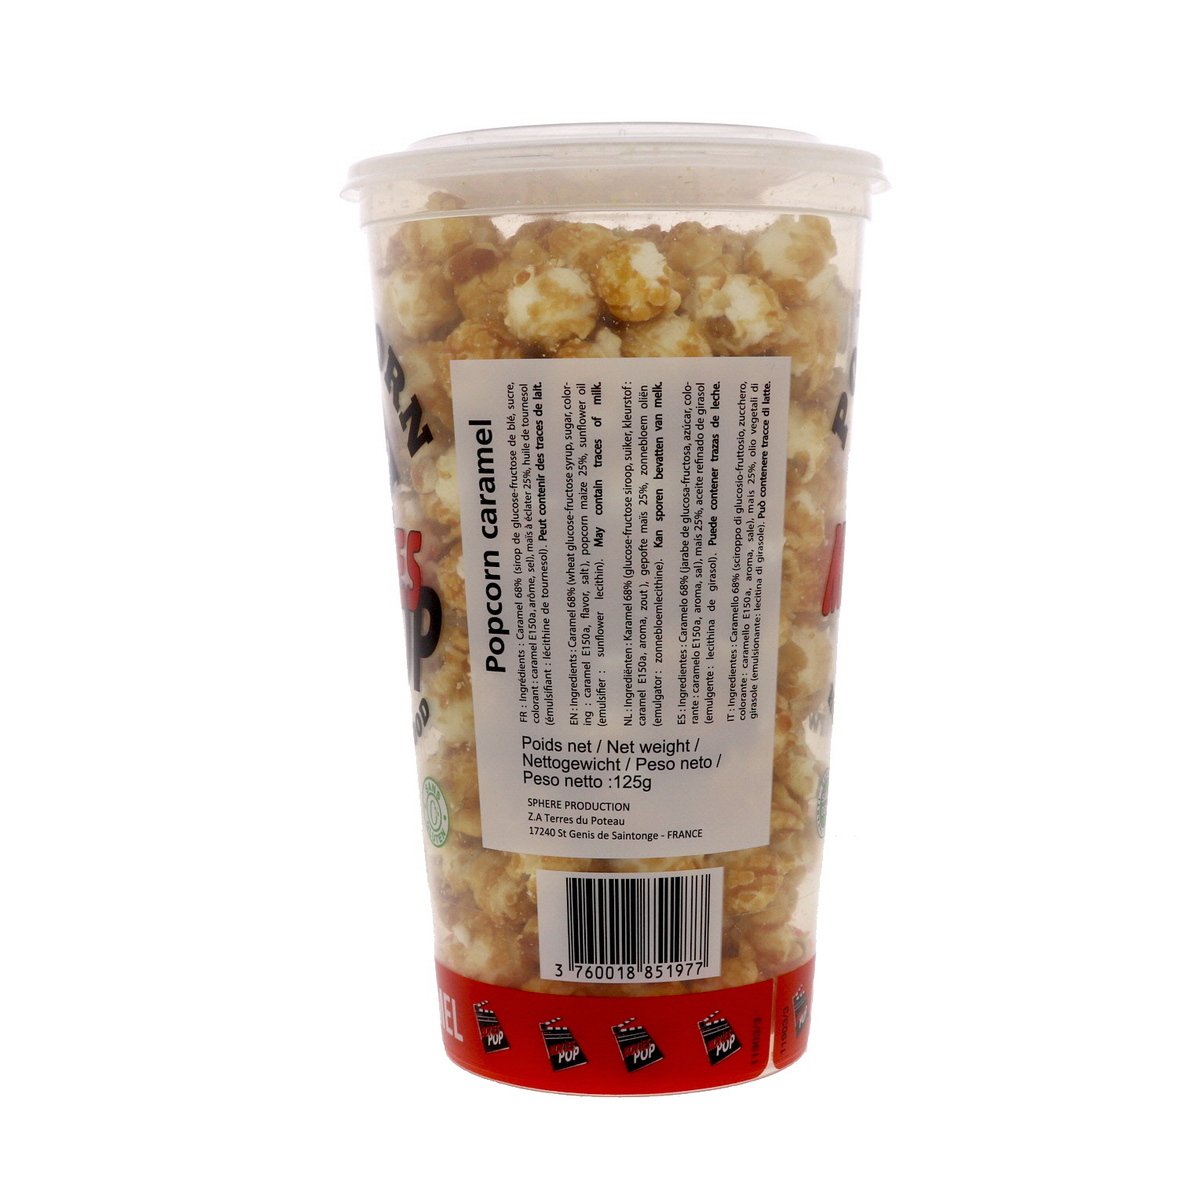 Movies Pop Caramel Popcorn 125 g